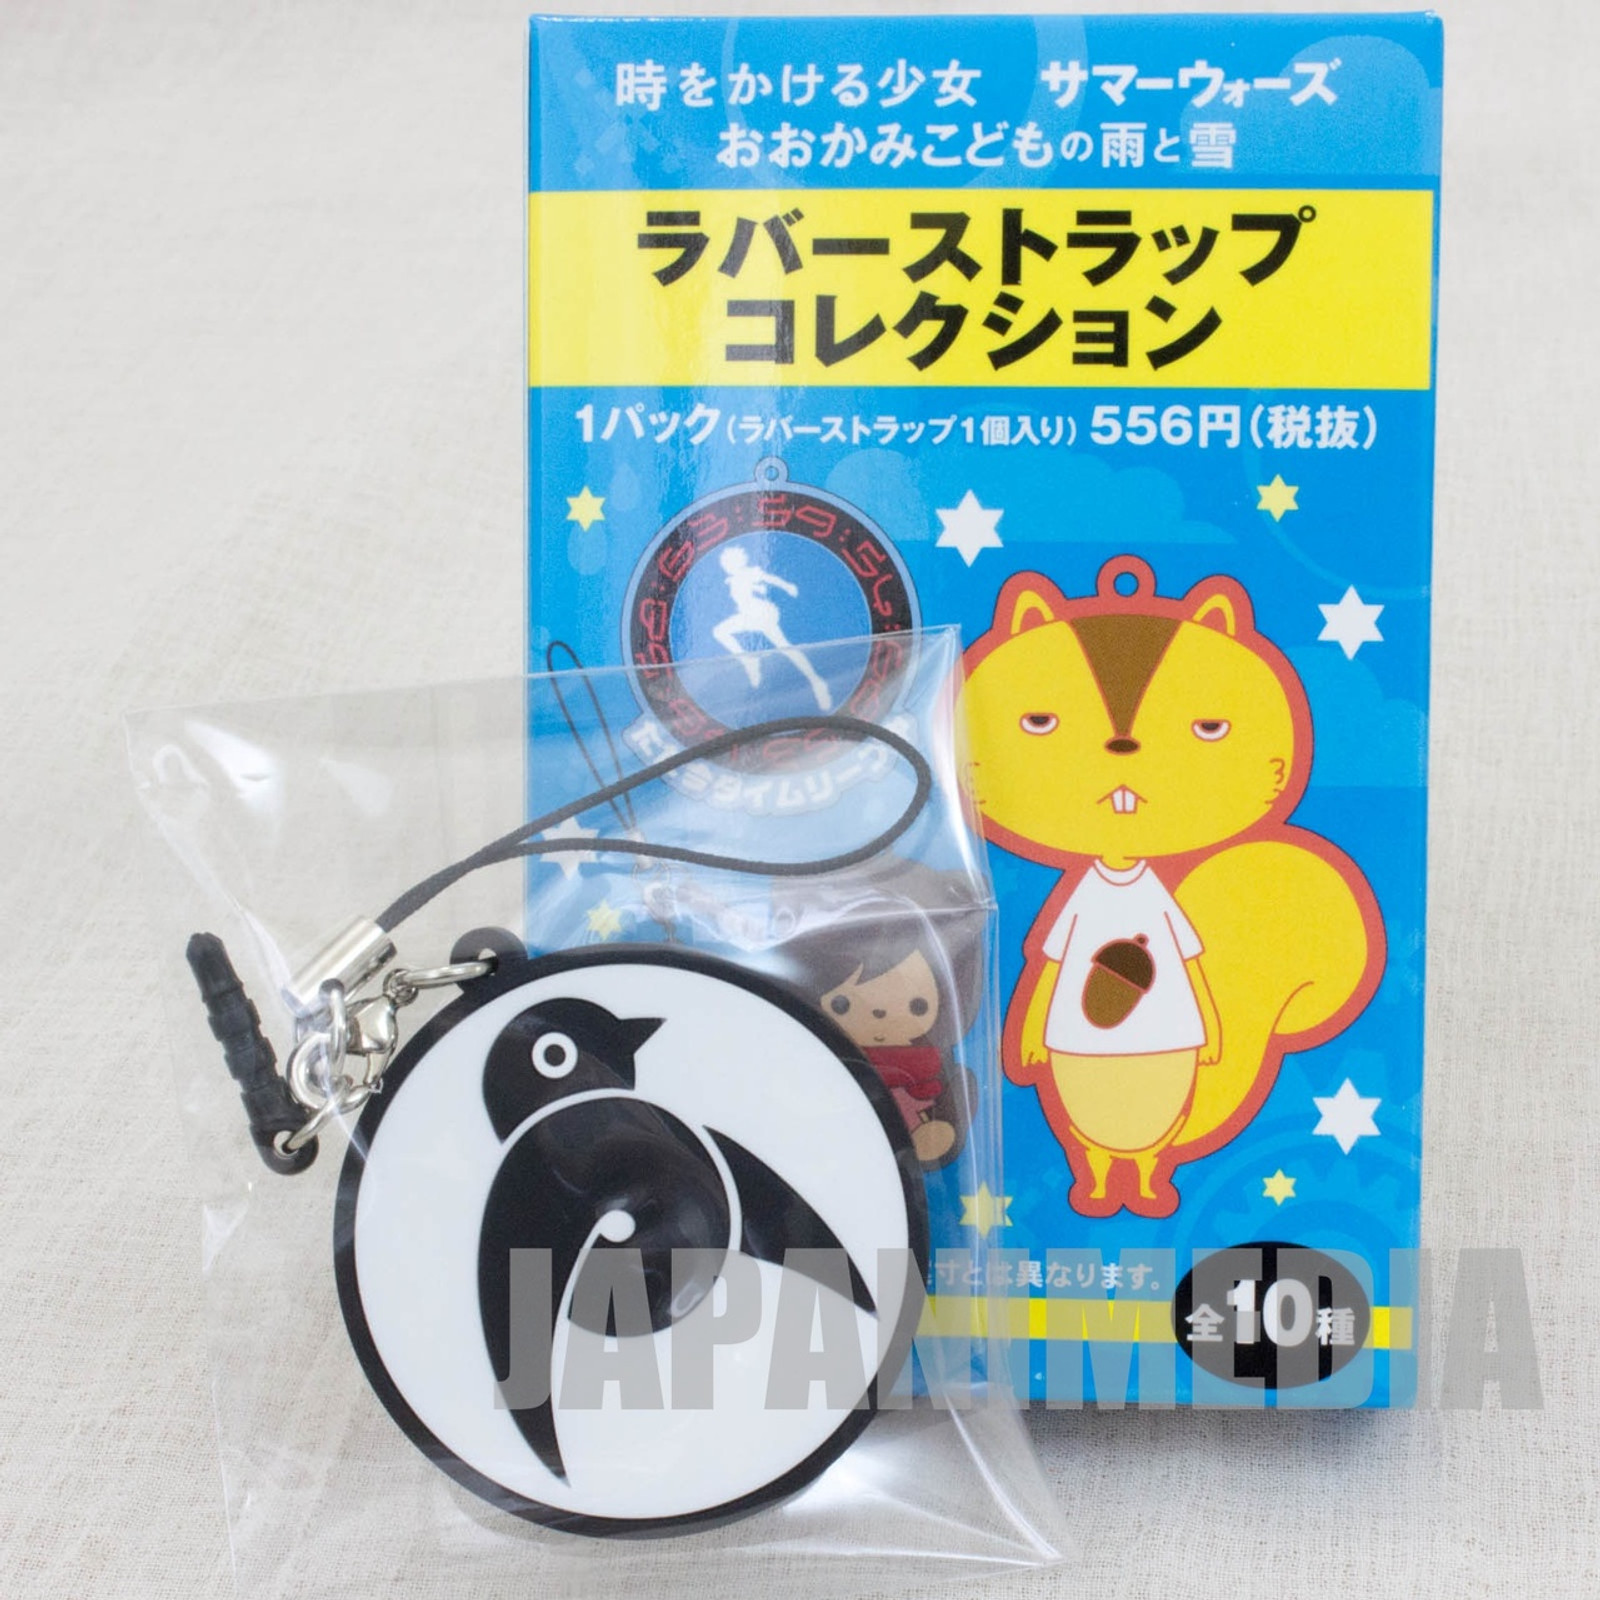 Summer Wars Jinnai Family Mark Mascot Rubber Strap JAPAN